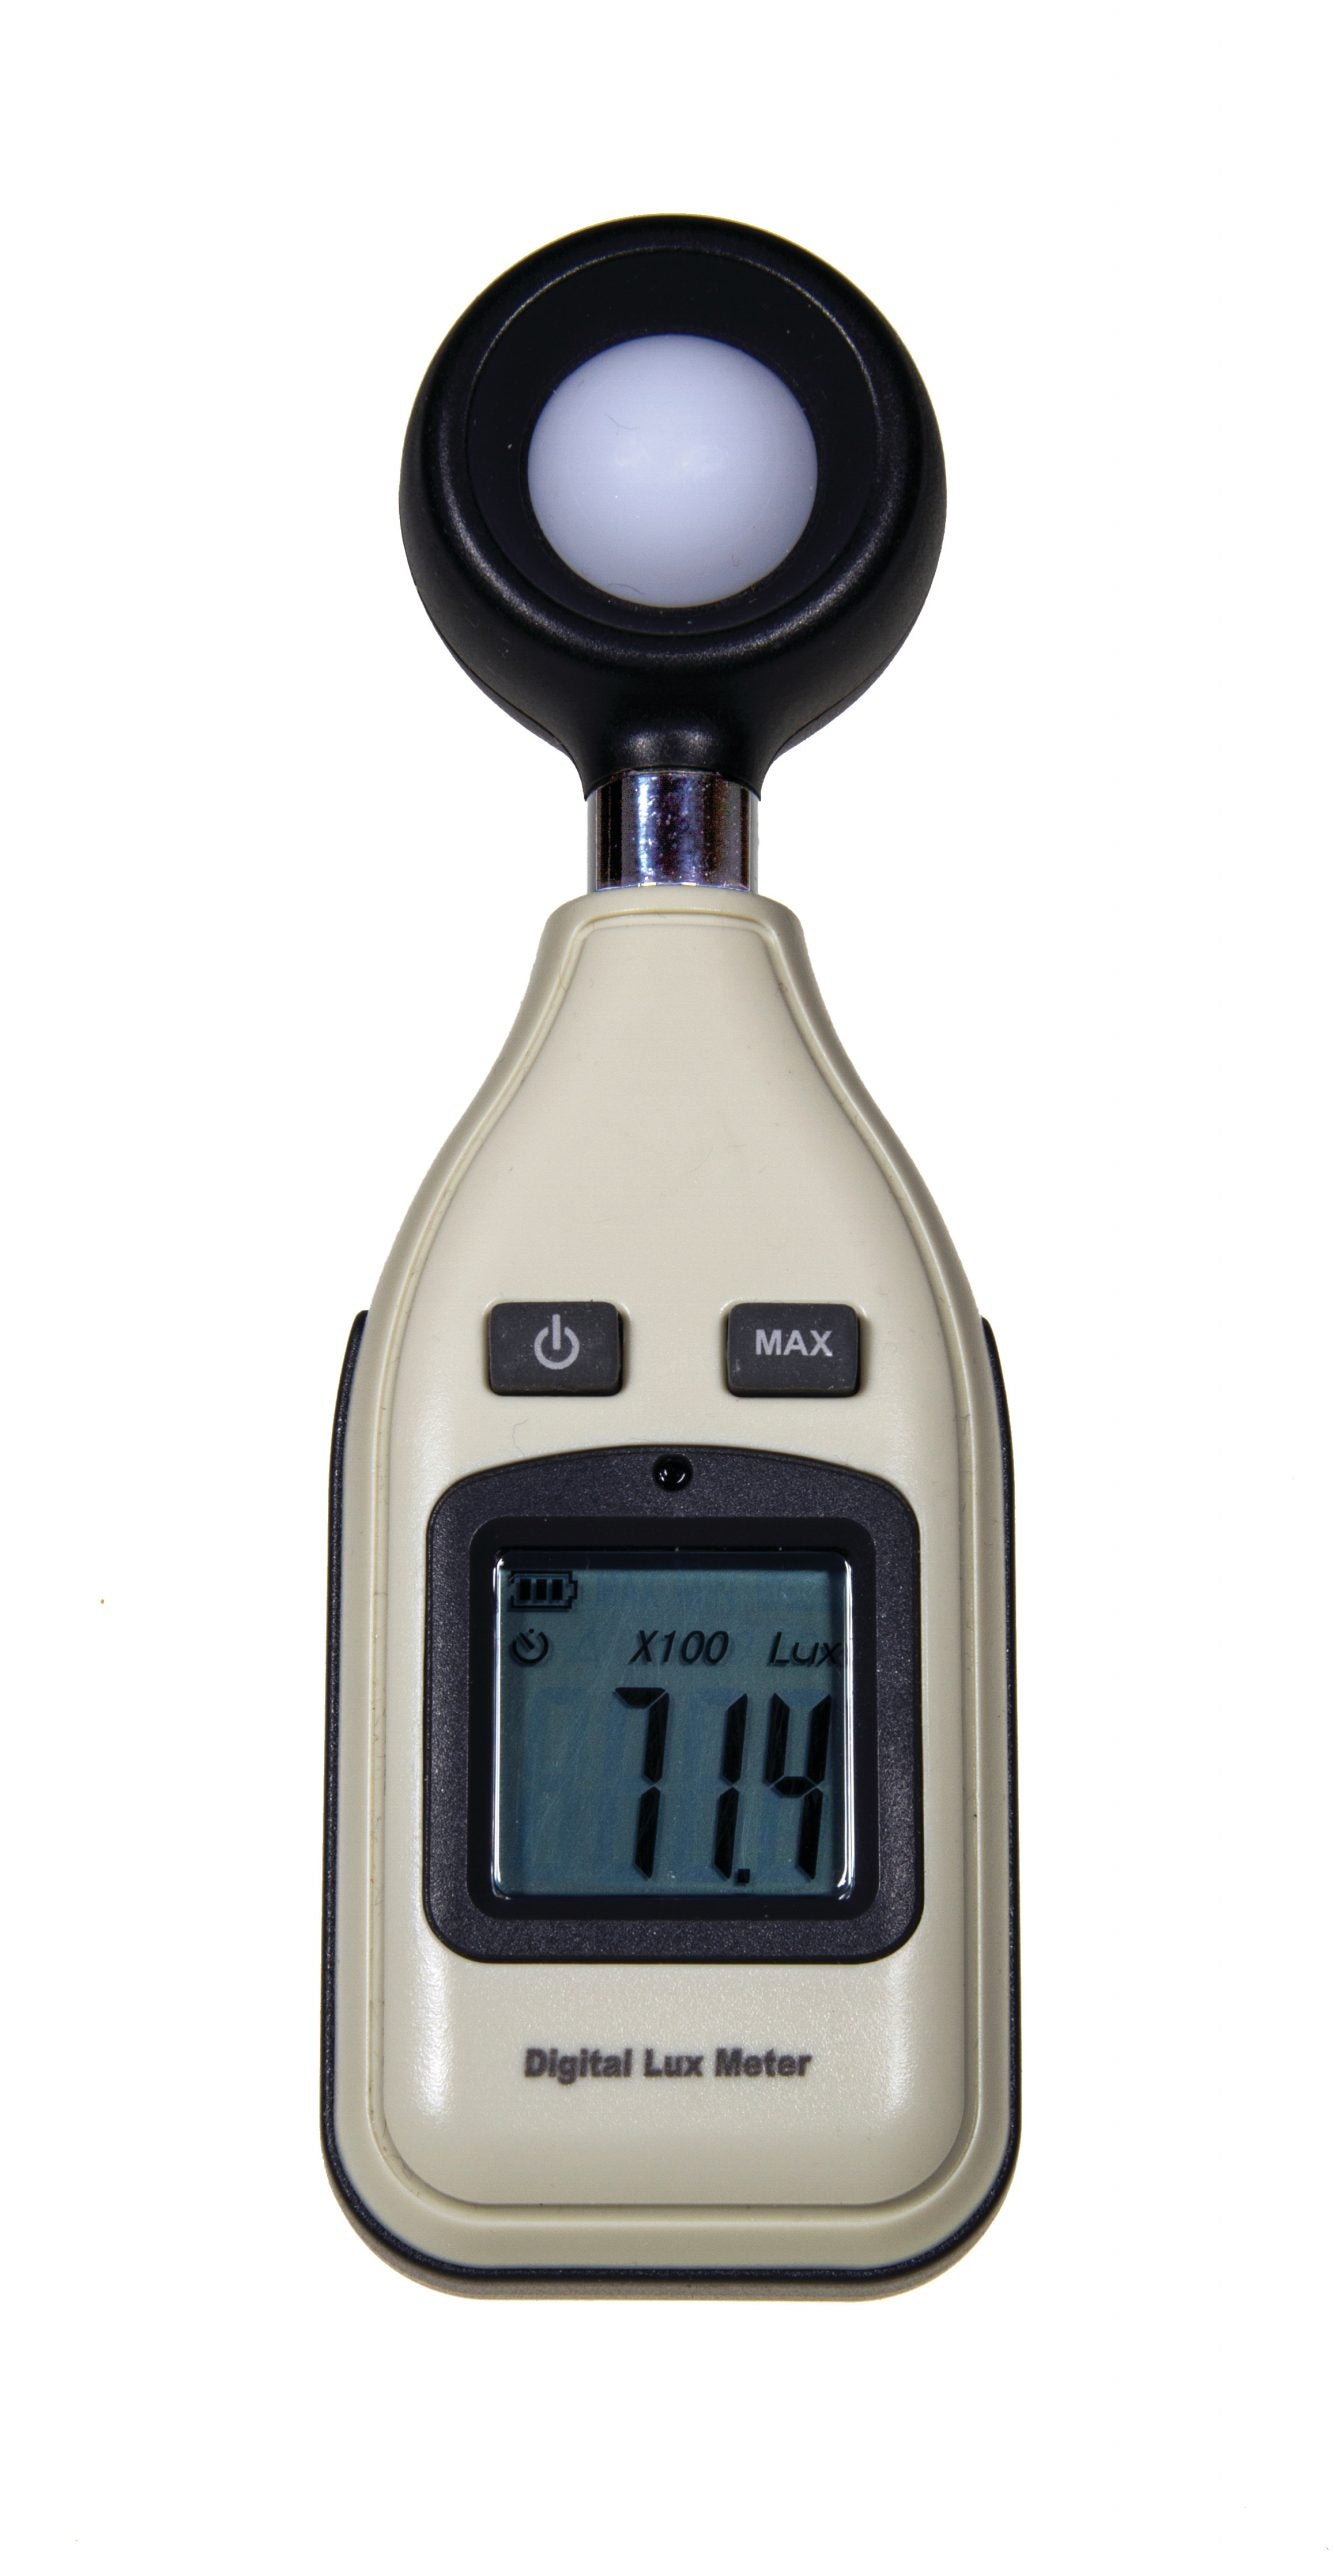 LXM001 Digital Luxmeter